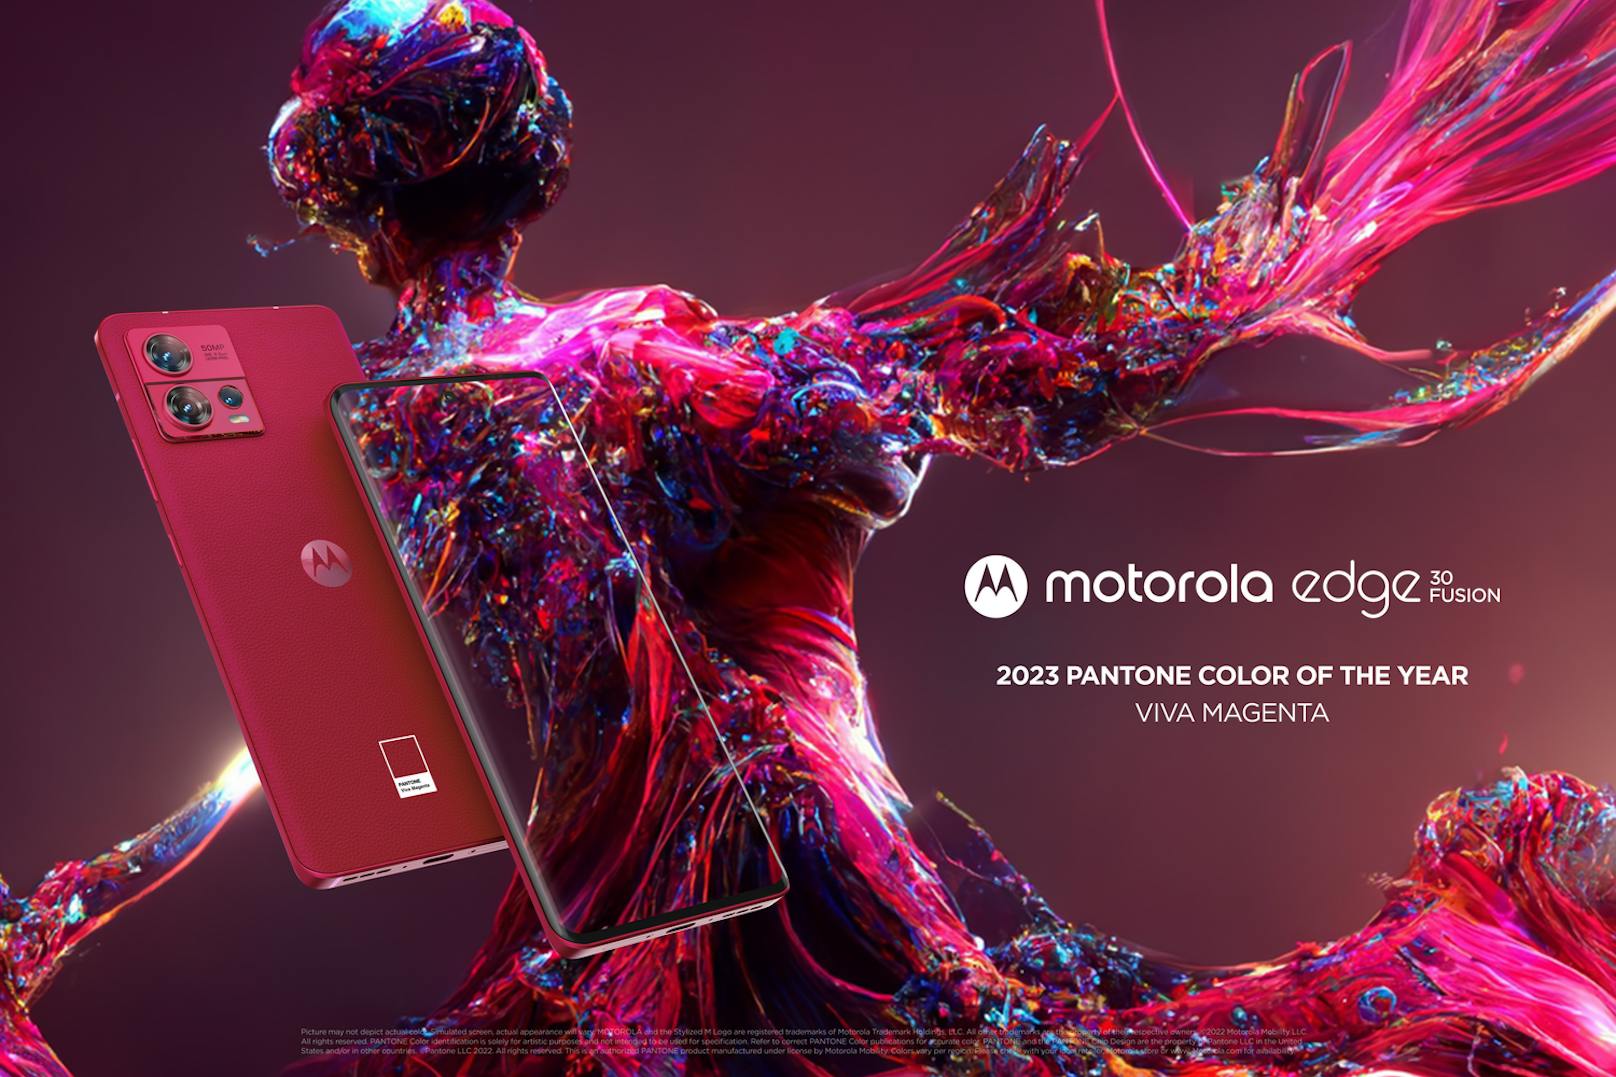 Motorola präsentiert Sonderedition des motorola edge30 fusion in der Pantone-Farbe des Jahres 2023: Viva Magenta.